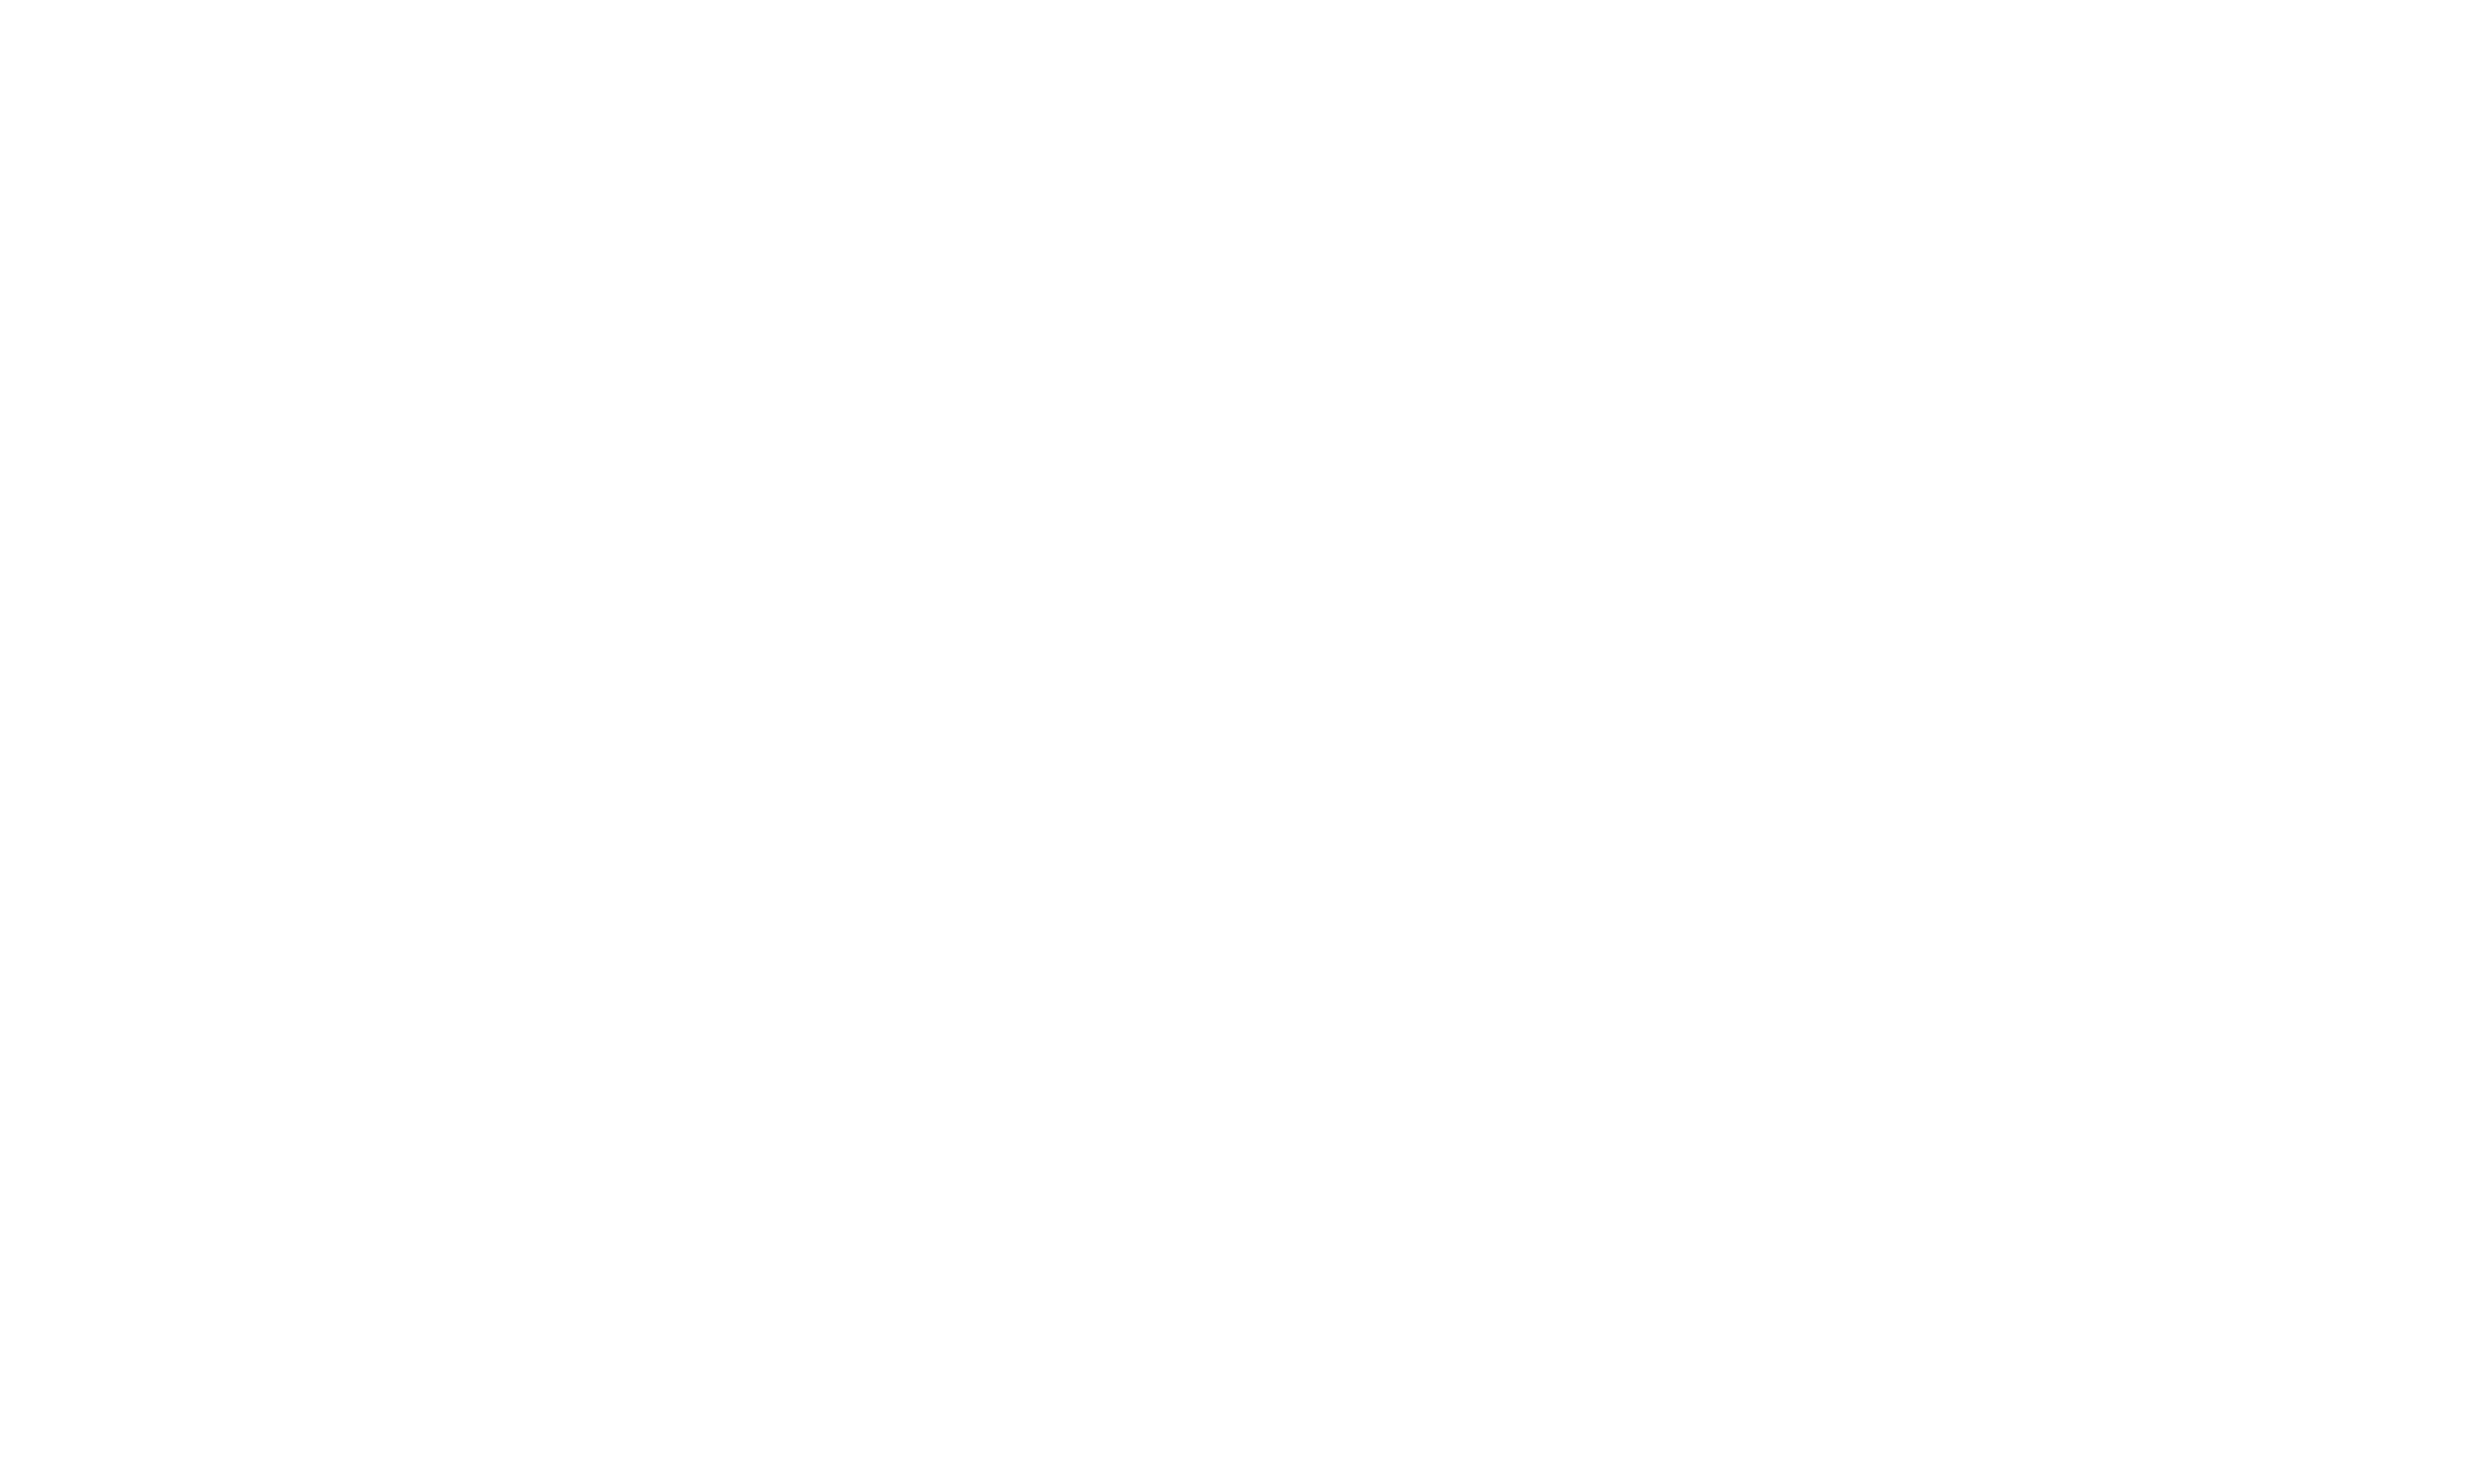 Limitless Adventures